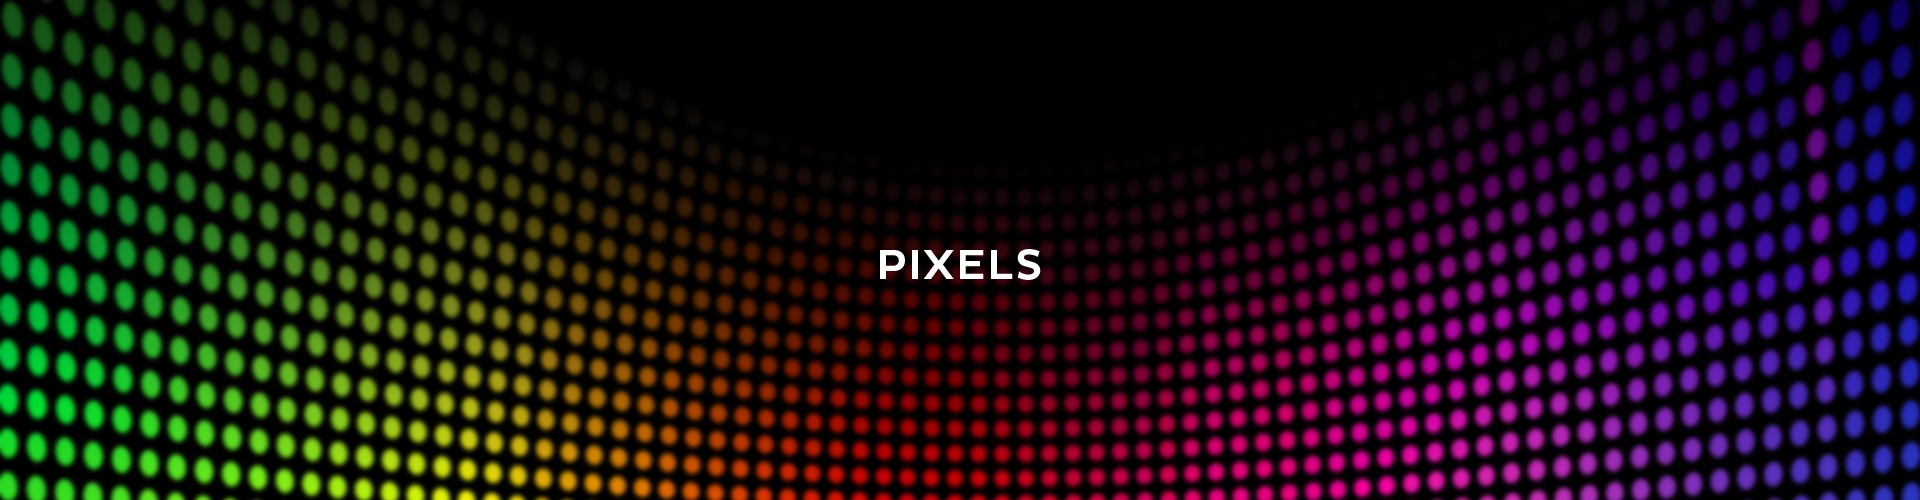 PIXELS-FINAL-new-size